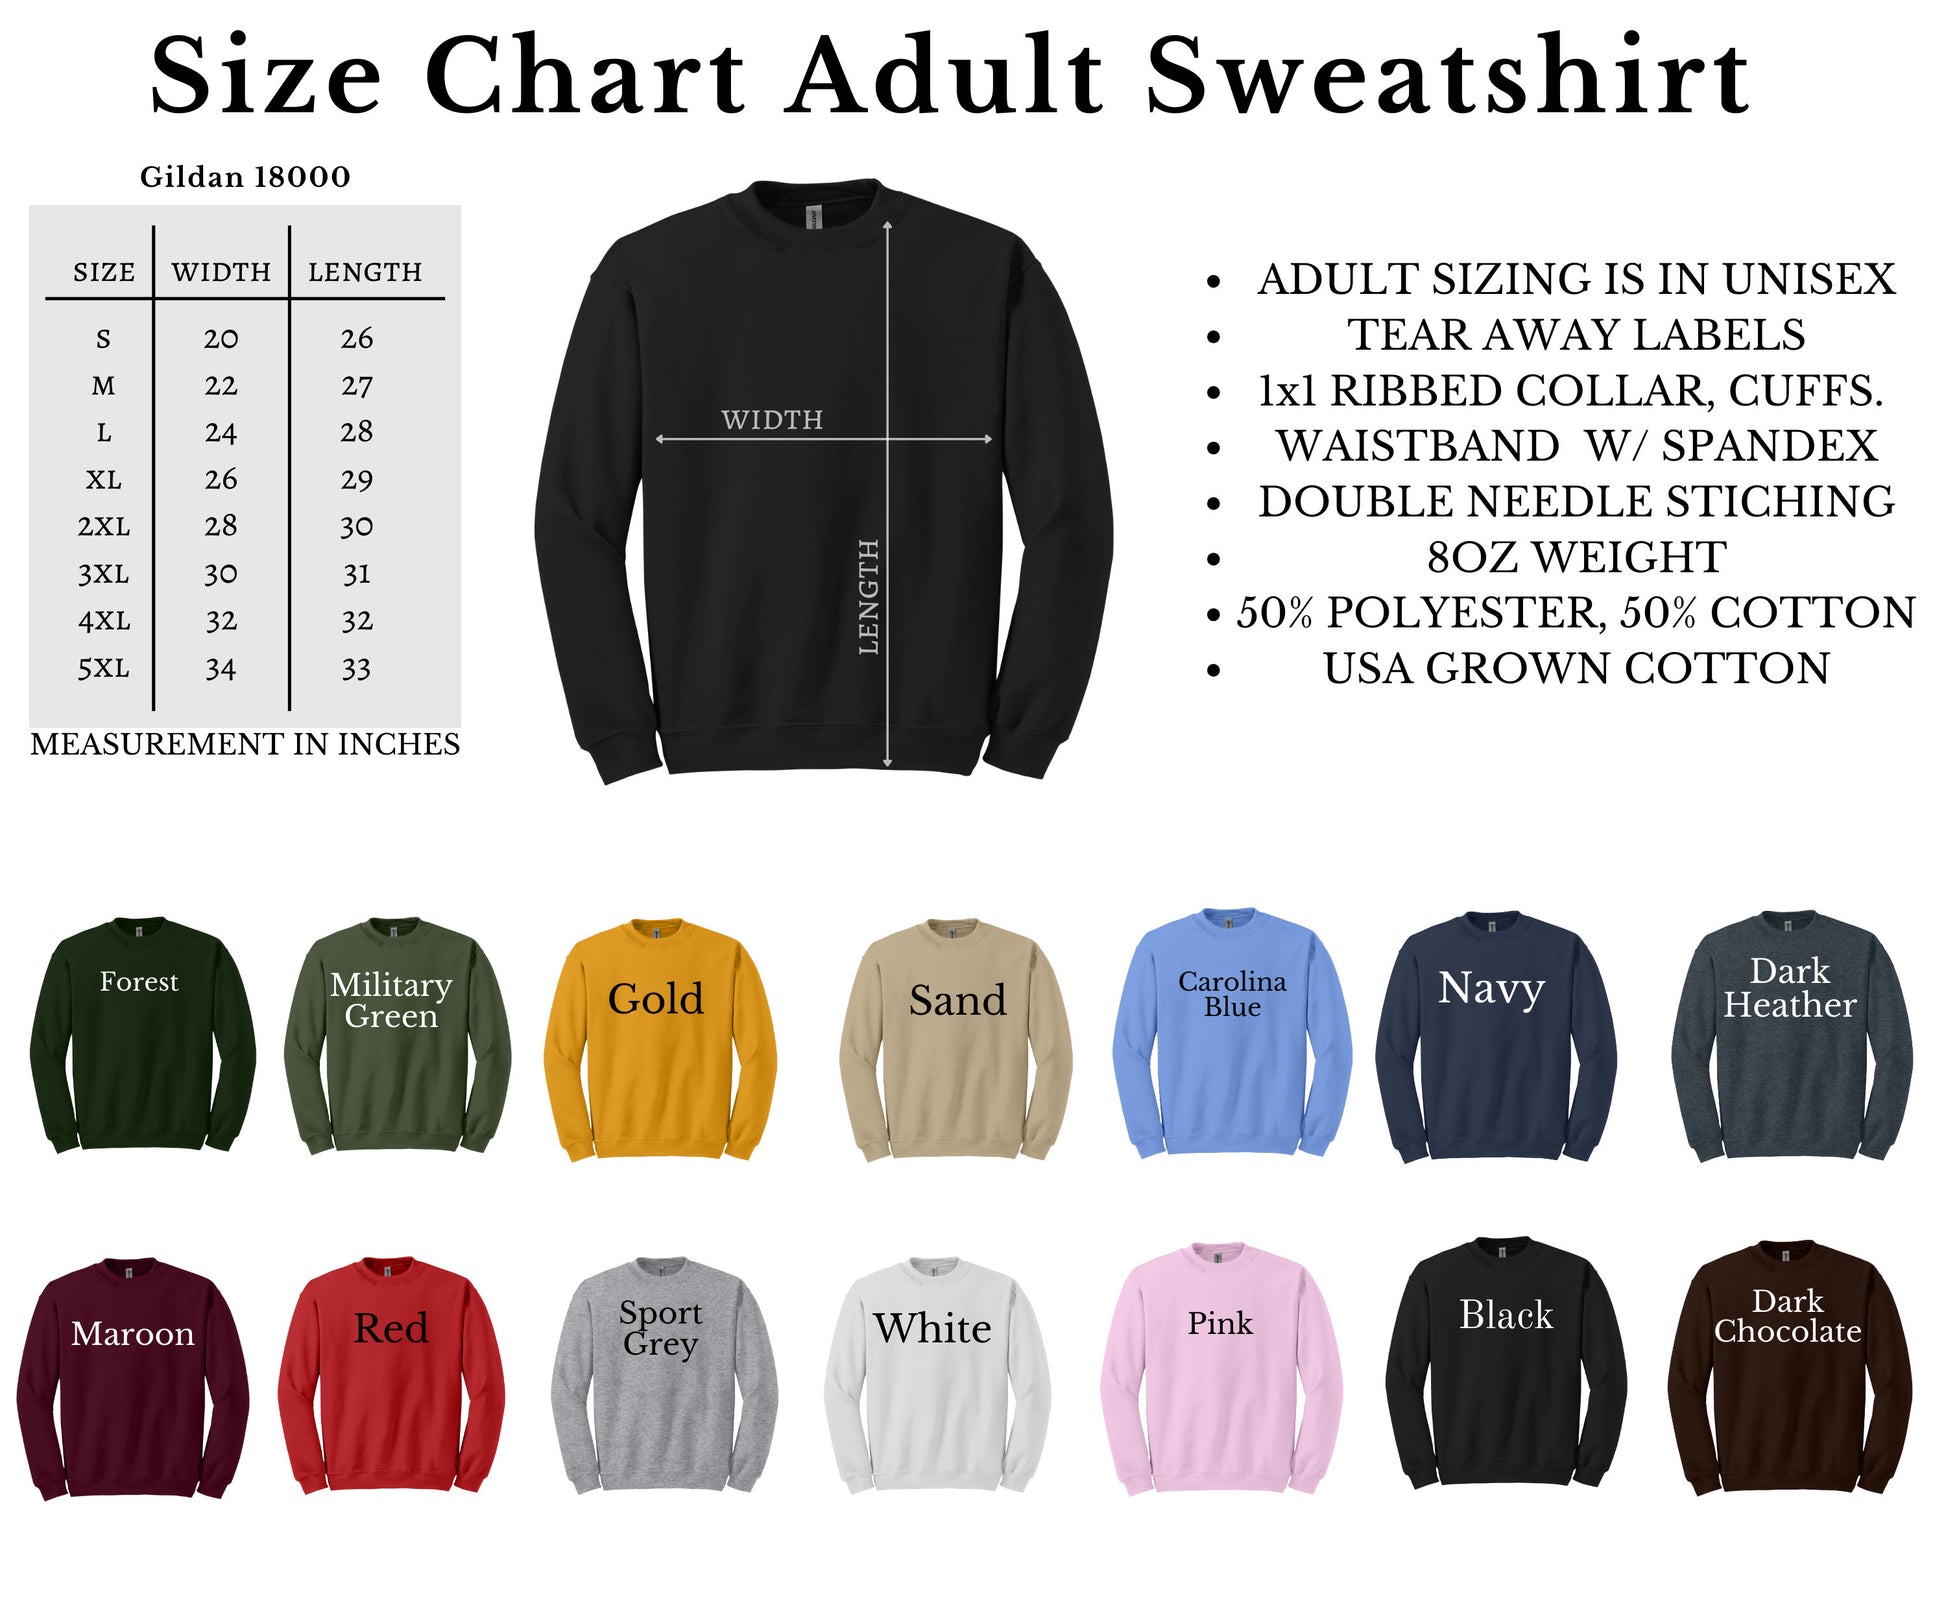 Aunties Favorite Sweatshirt, Aunties Favorite Shirt, Aunties Favorite Crewneck, Aunties Favorite Sweater, Oversized Sweater, Comfy Sweater